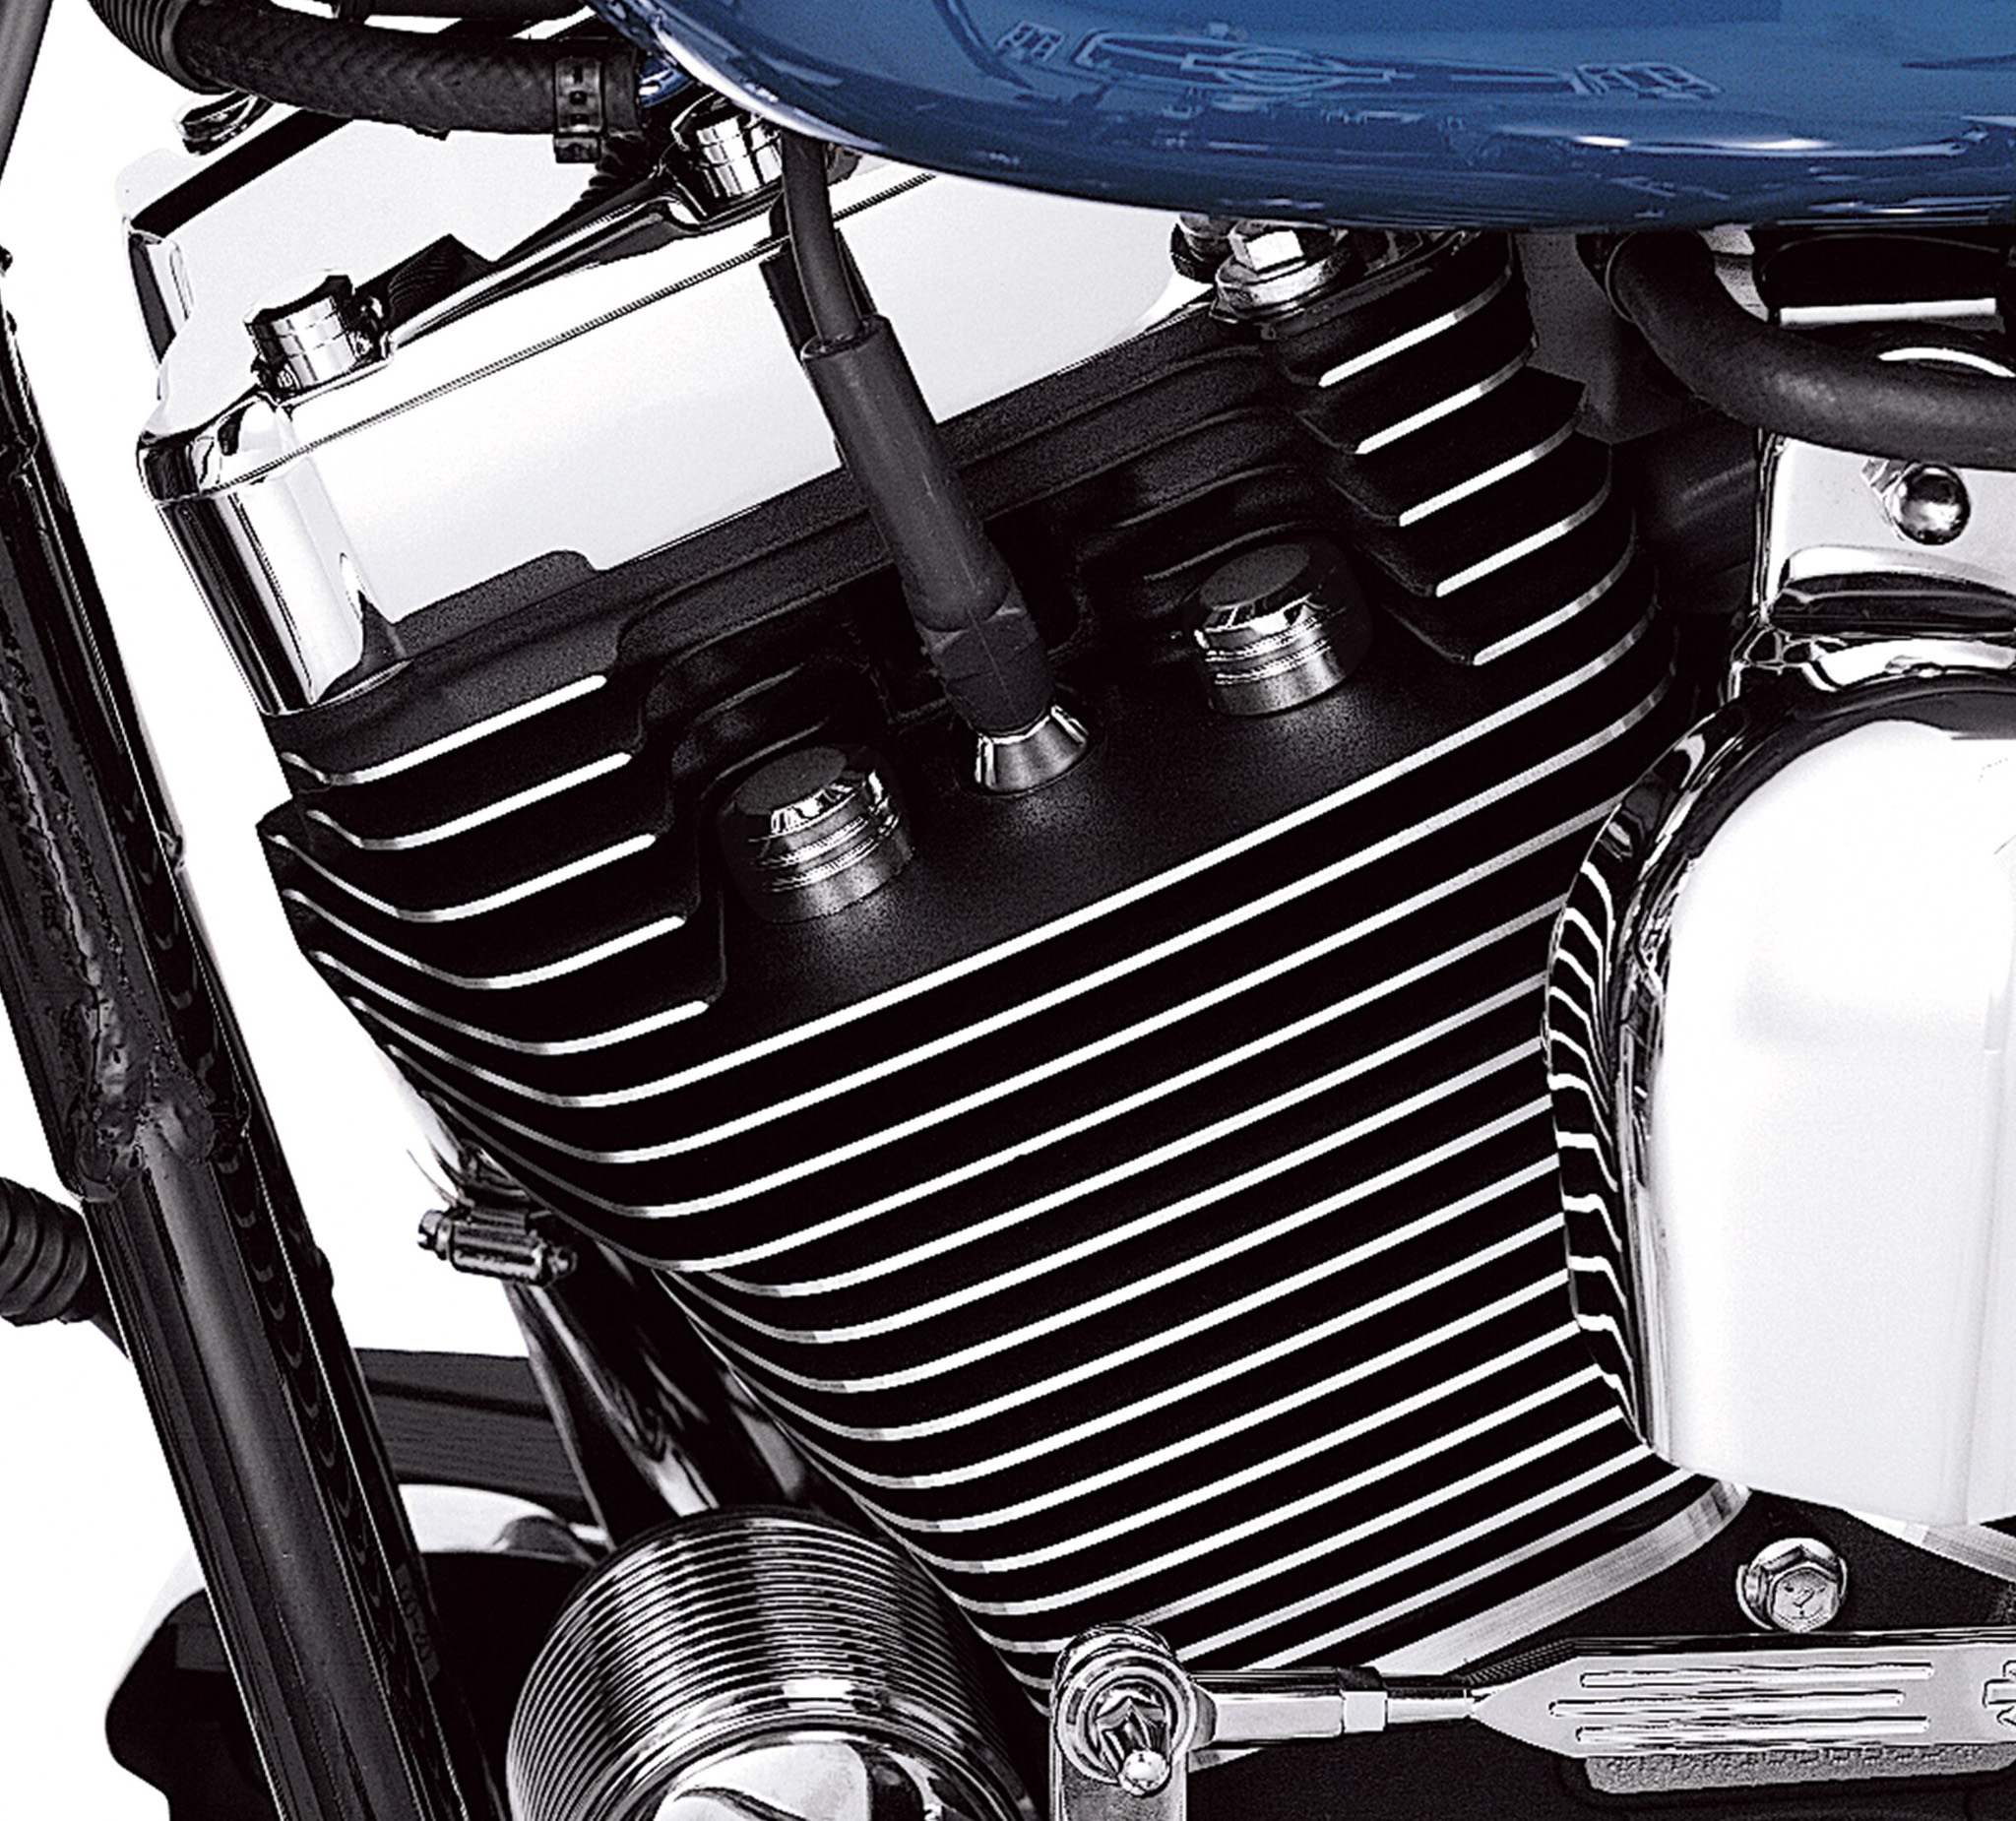 Chrome Spark Plug Head Bolt Cover Set for Sportster 1986-2003 Harley Davidson